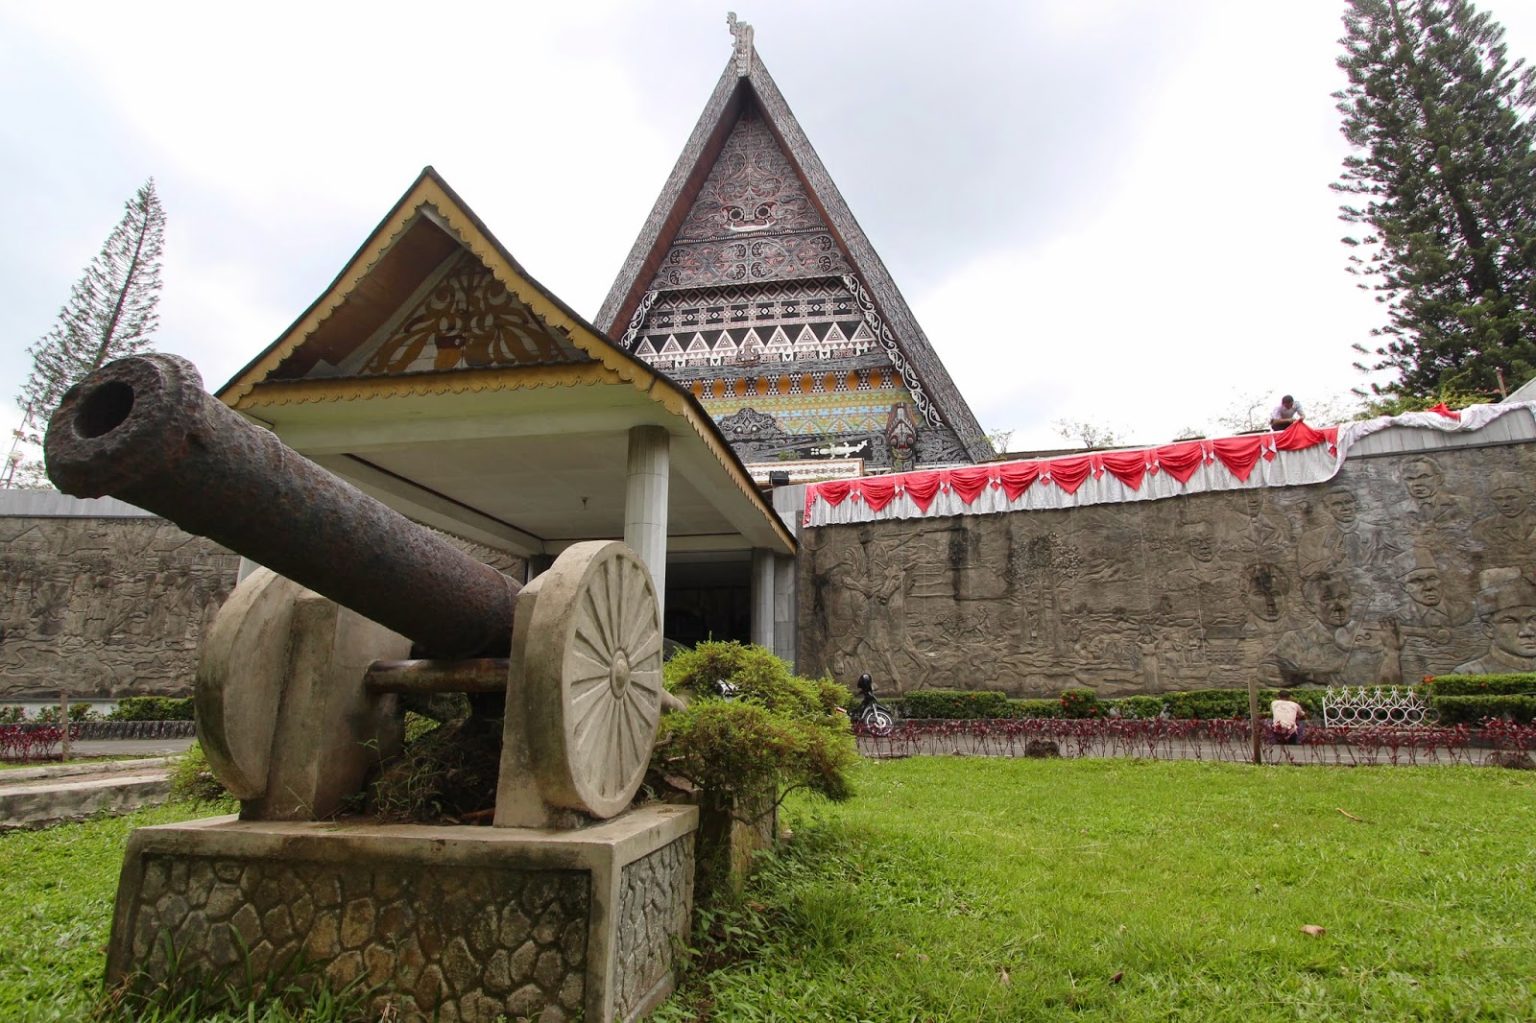 Lagi di Sumatera Utara? Ini Daftar Tempat Wisata di Medan